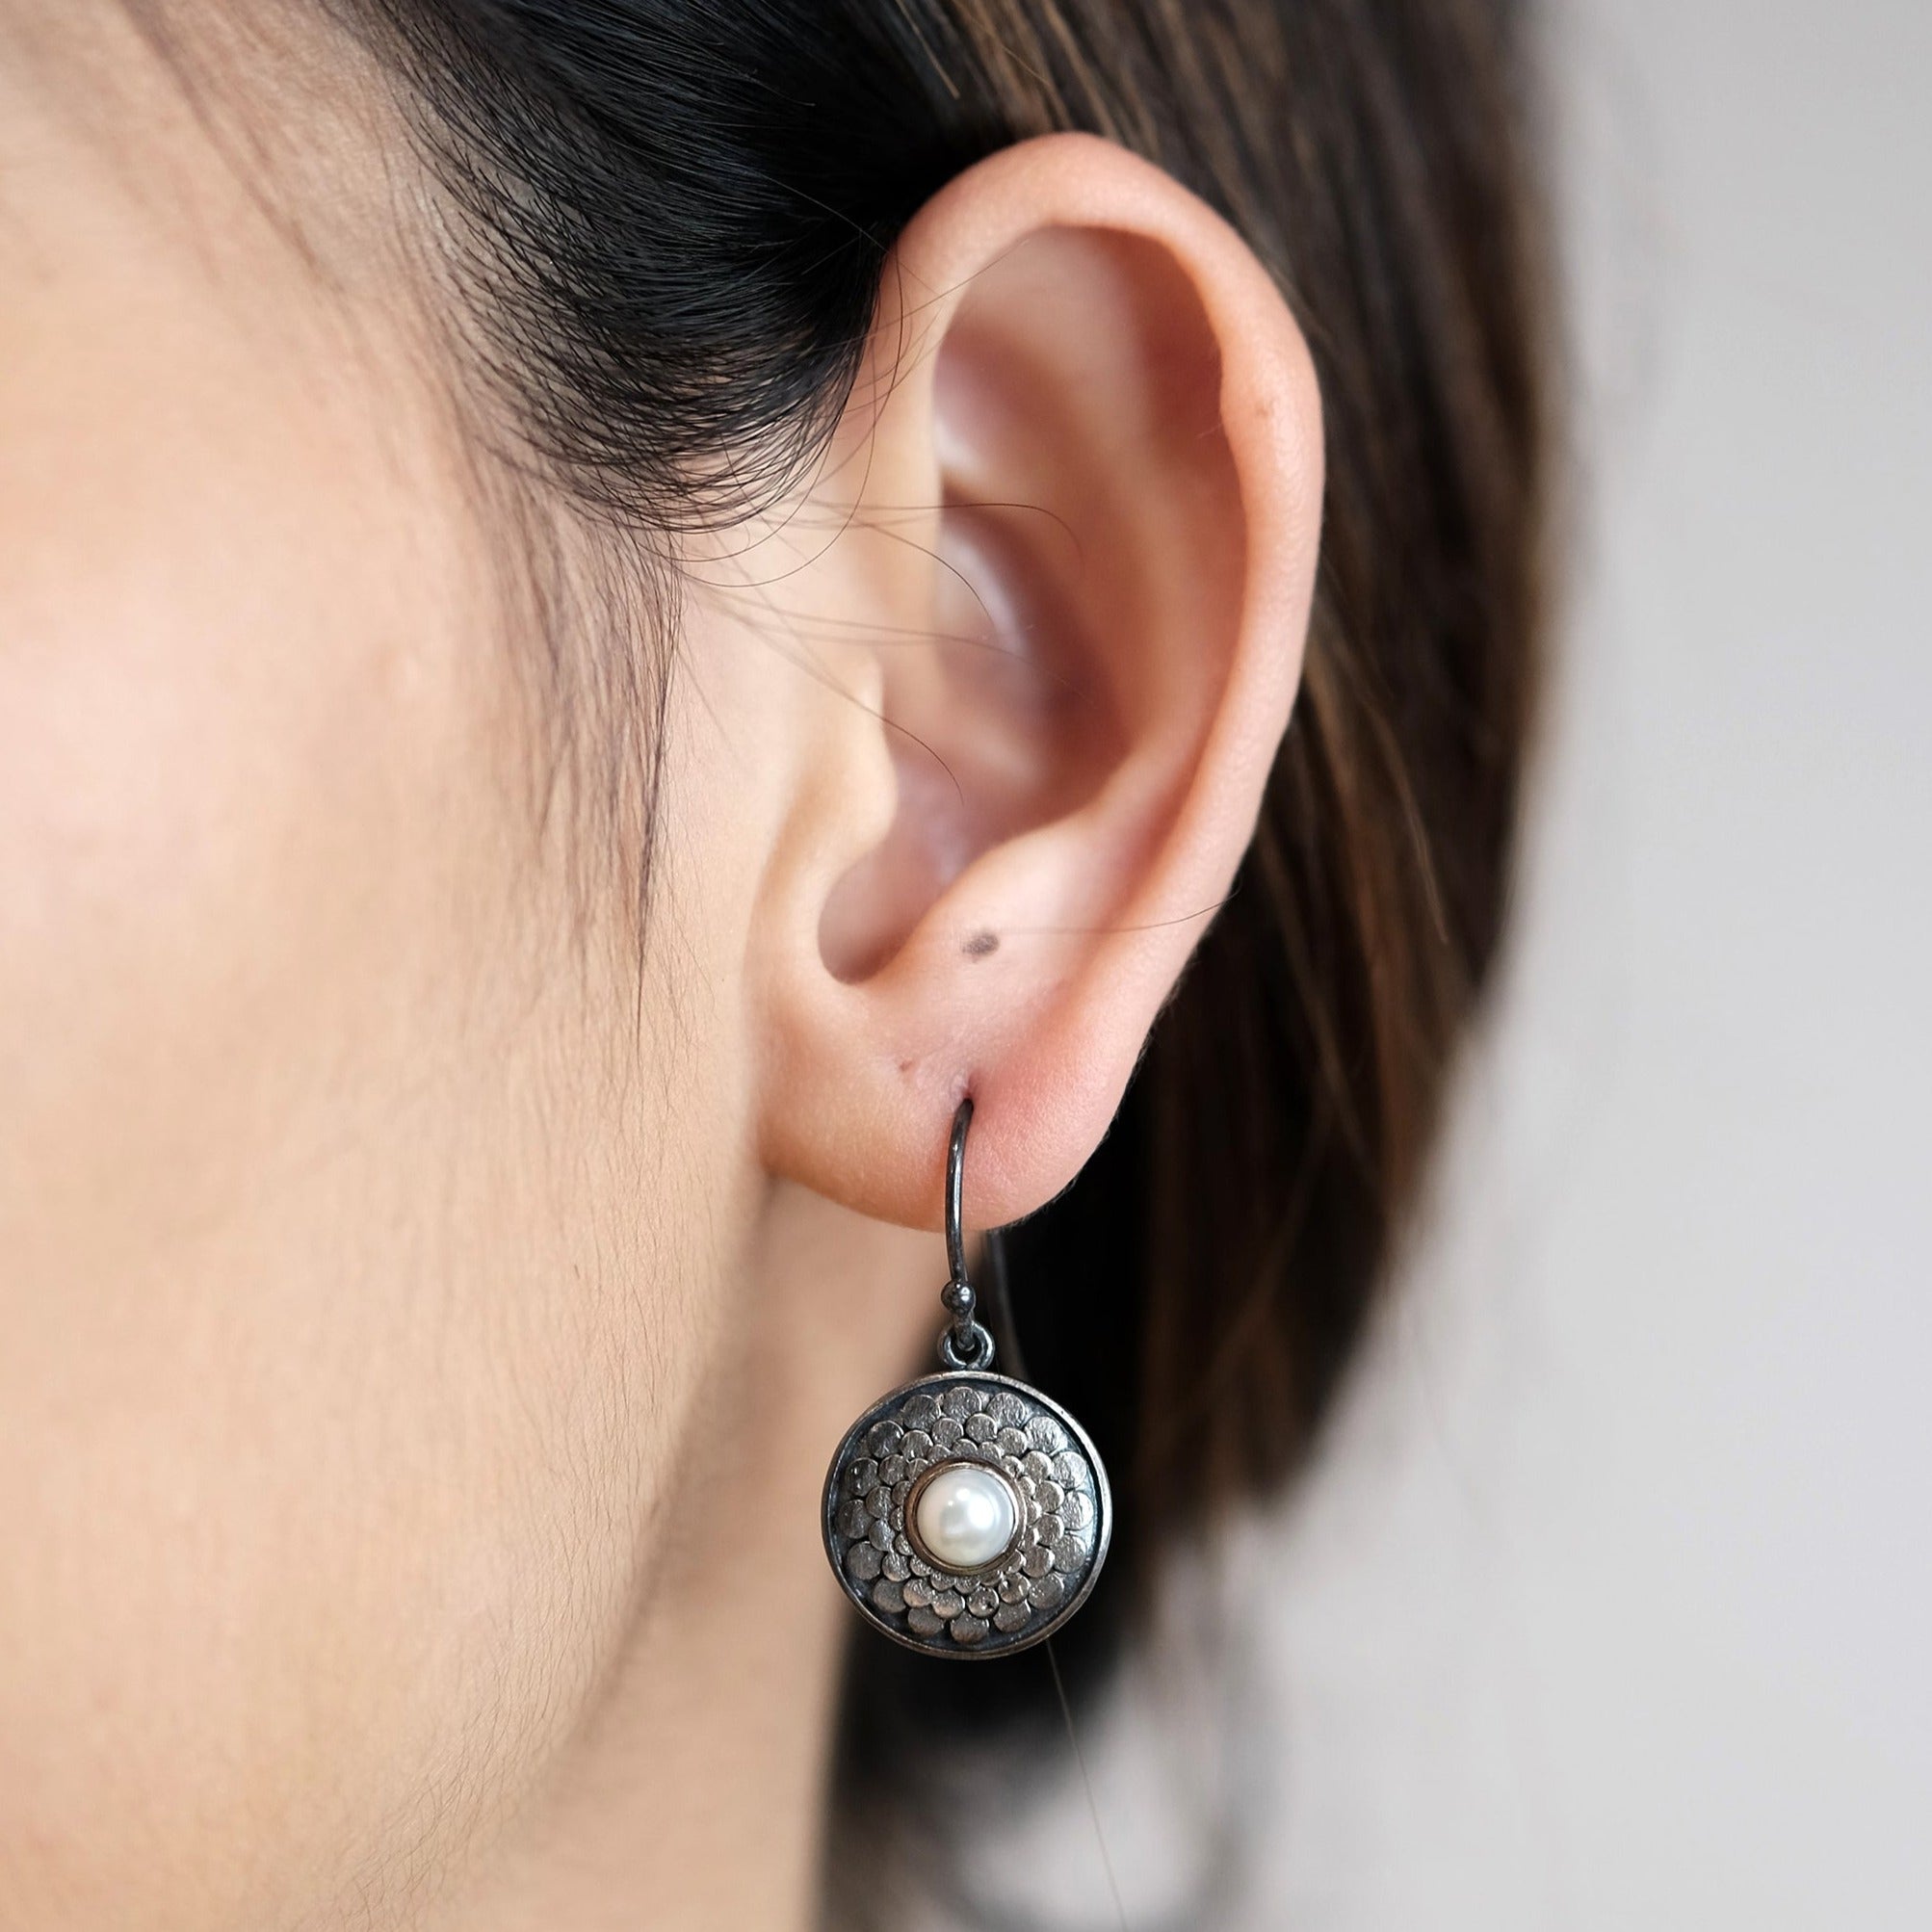 The Madstone shield earrings